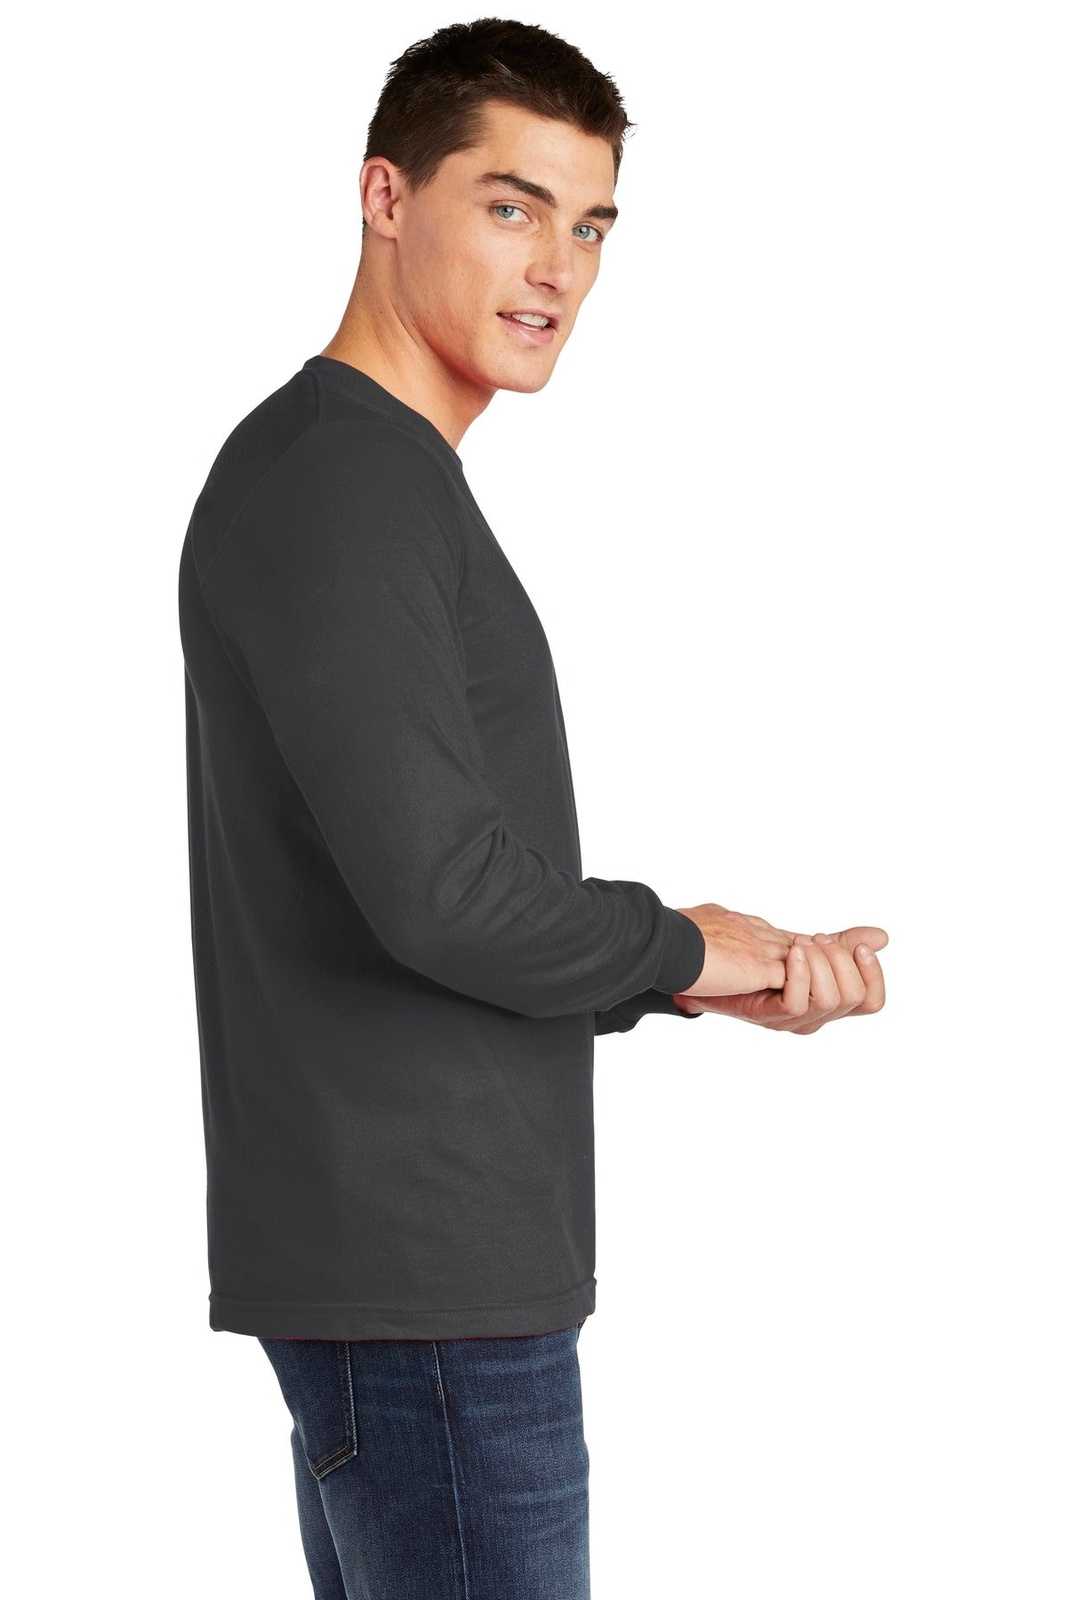 American Apparel 2007W Fine Jersey Long Sleeve T-Shirt - Asphalt - HIT a Double